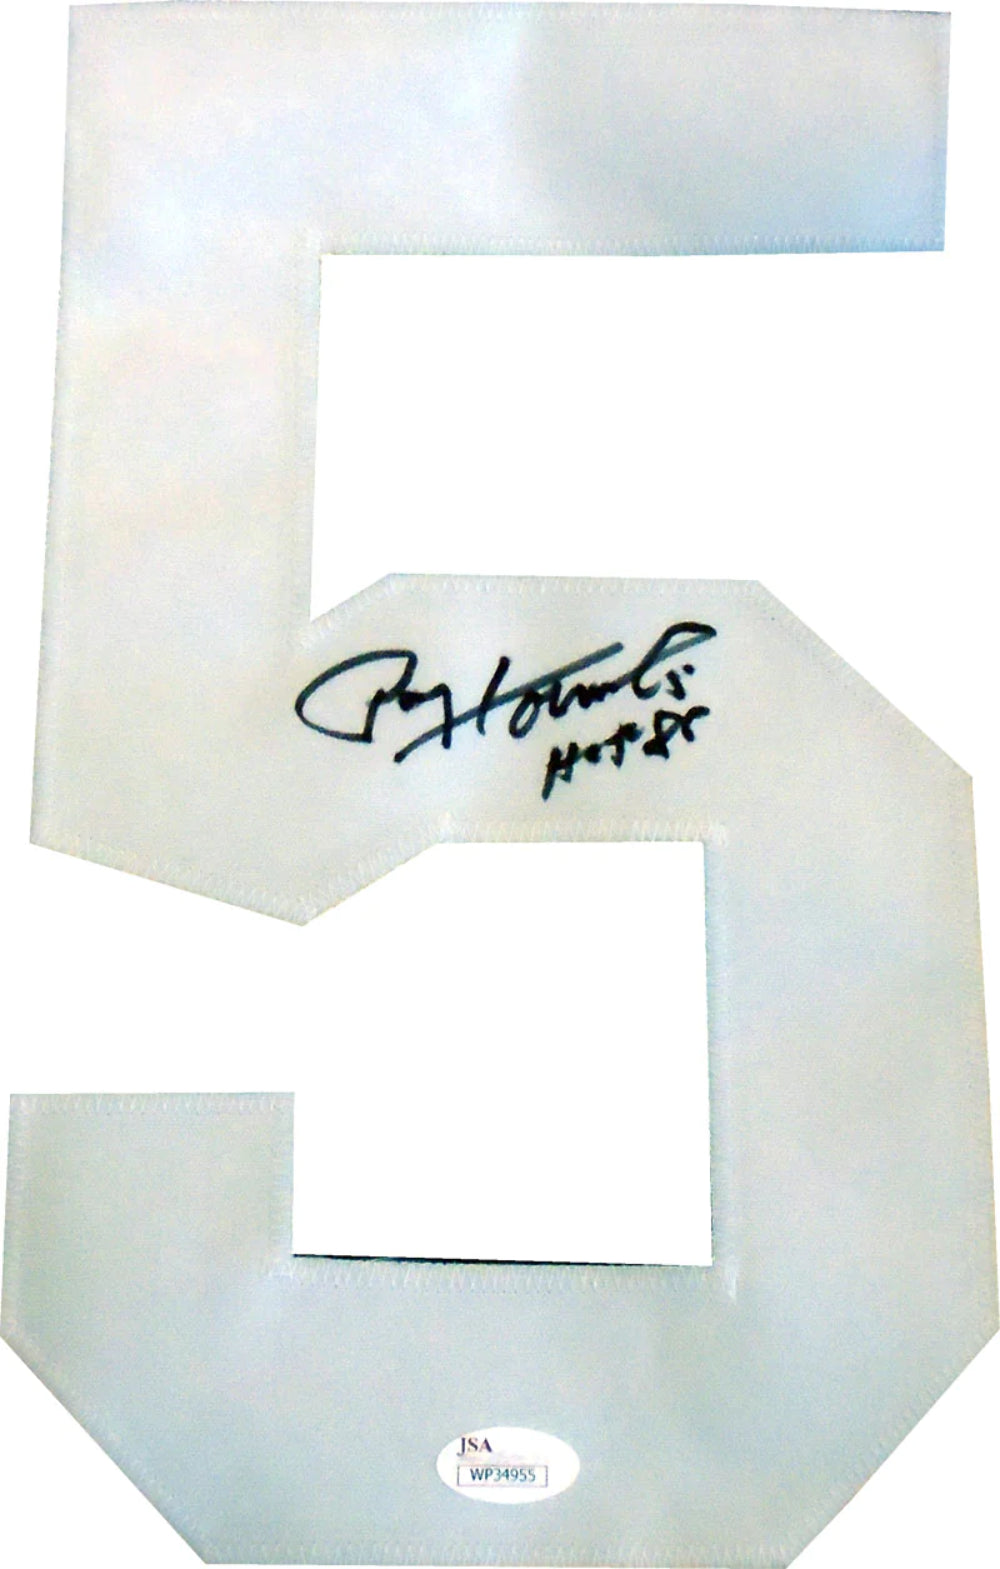 Paul Hornung "HOF 86" Autographed Green Bay Packers Jersey (JSA) Image 2